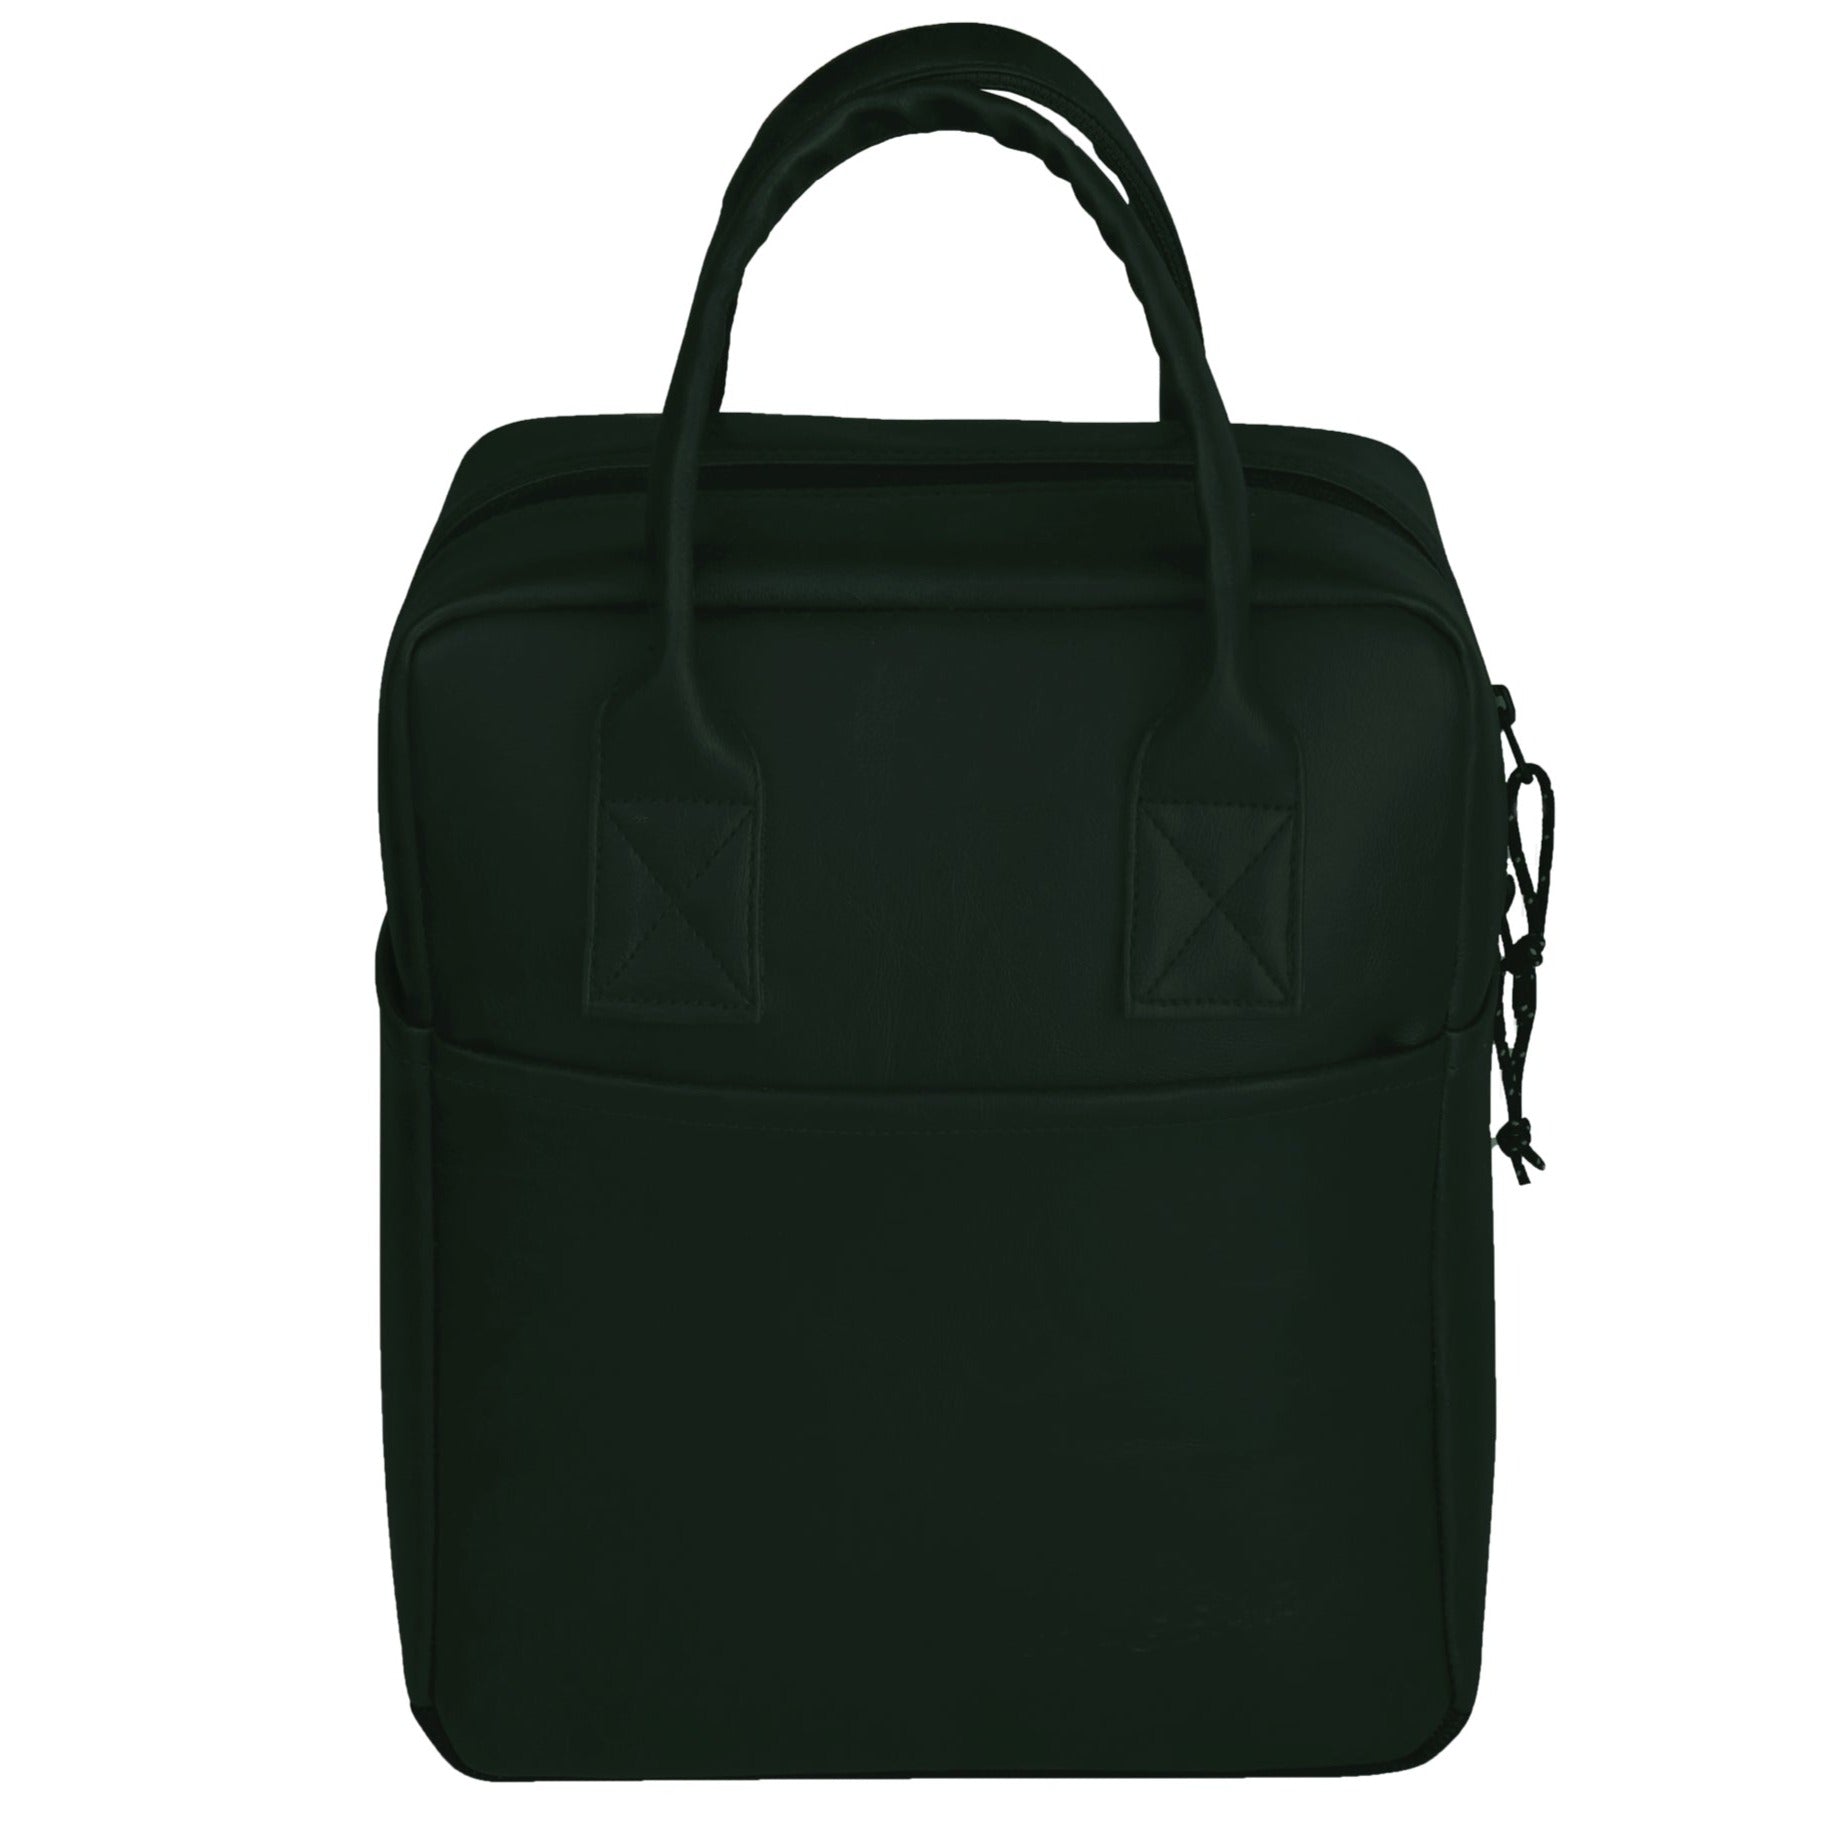 Modern Work Tote Handbag - A New Day™ Green : Target